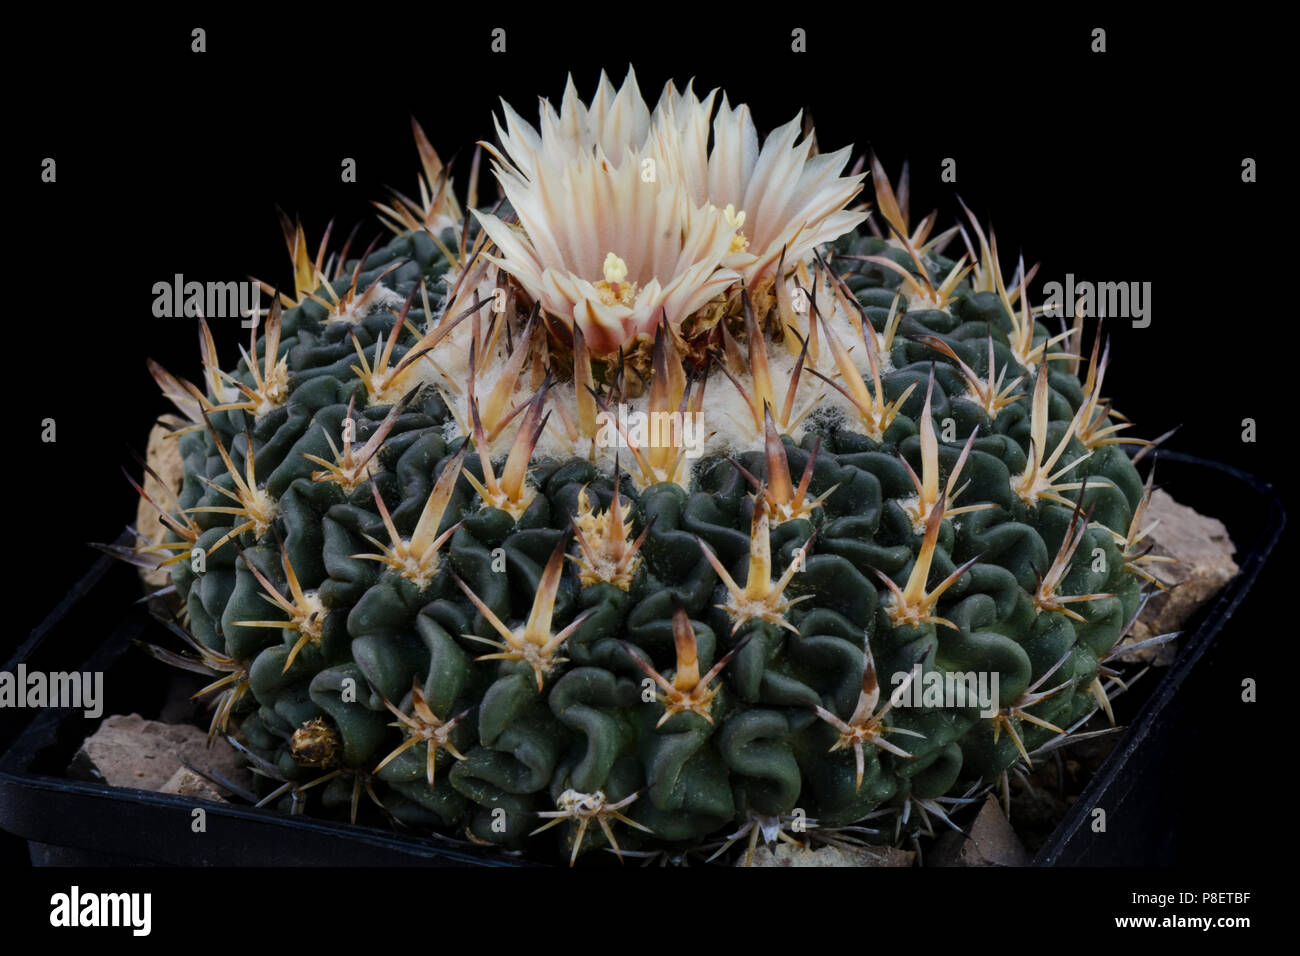 Cactus Echinofossulocactus with flower isolated on Black Stock Photo